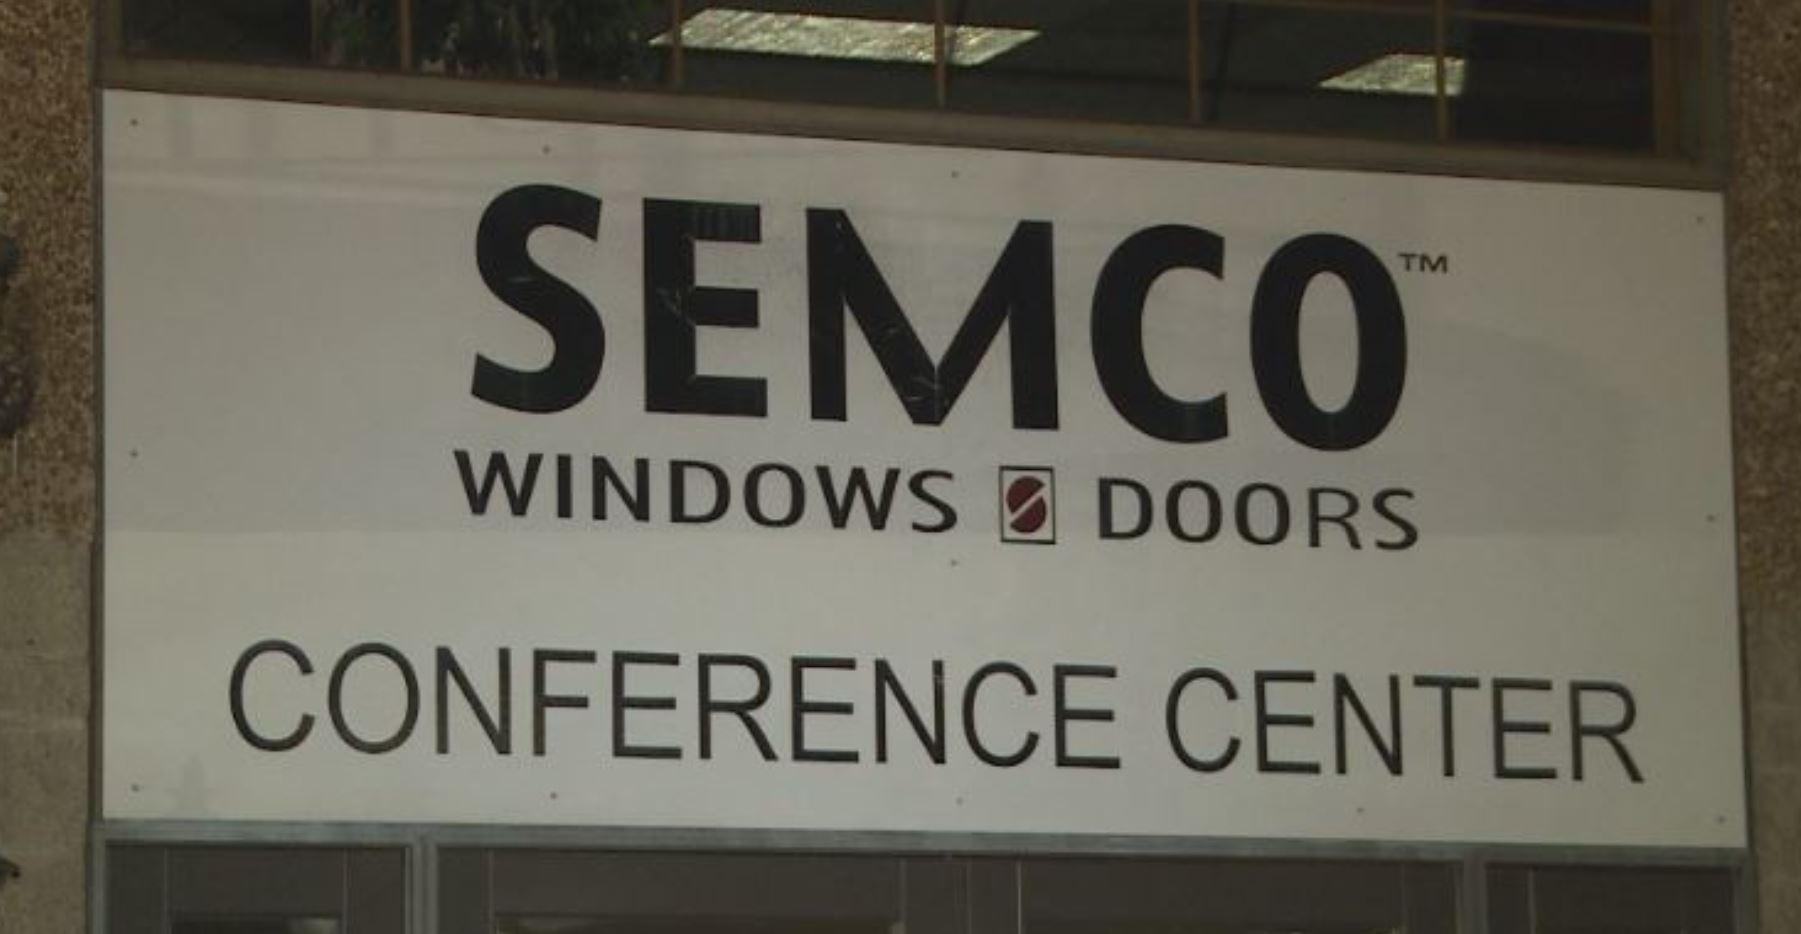 Sierra Pacific Windows Acquires Semco Assets Wxpr